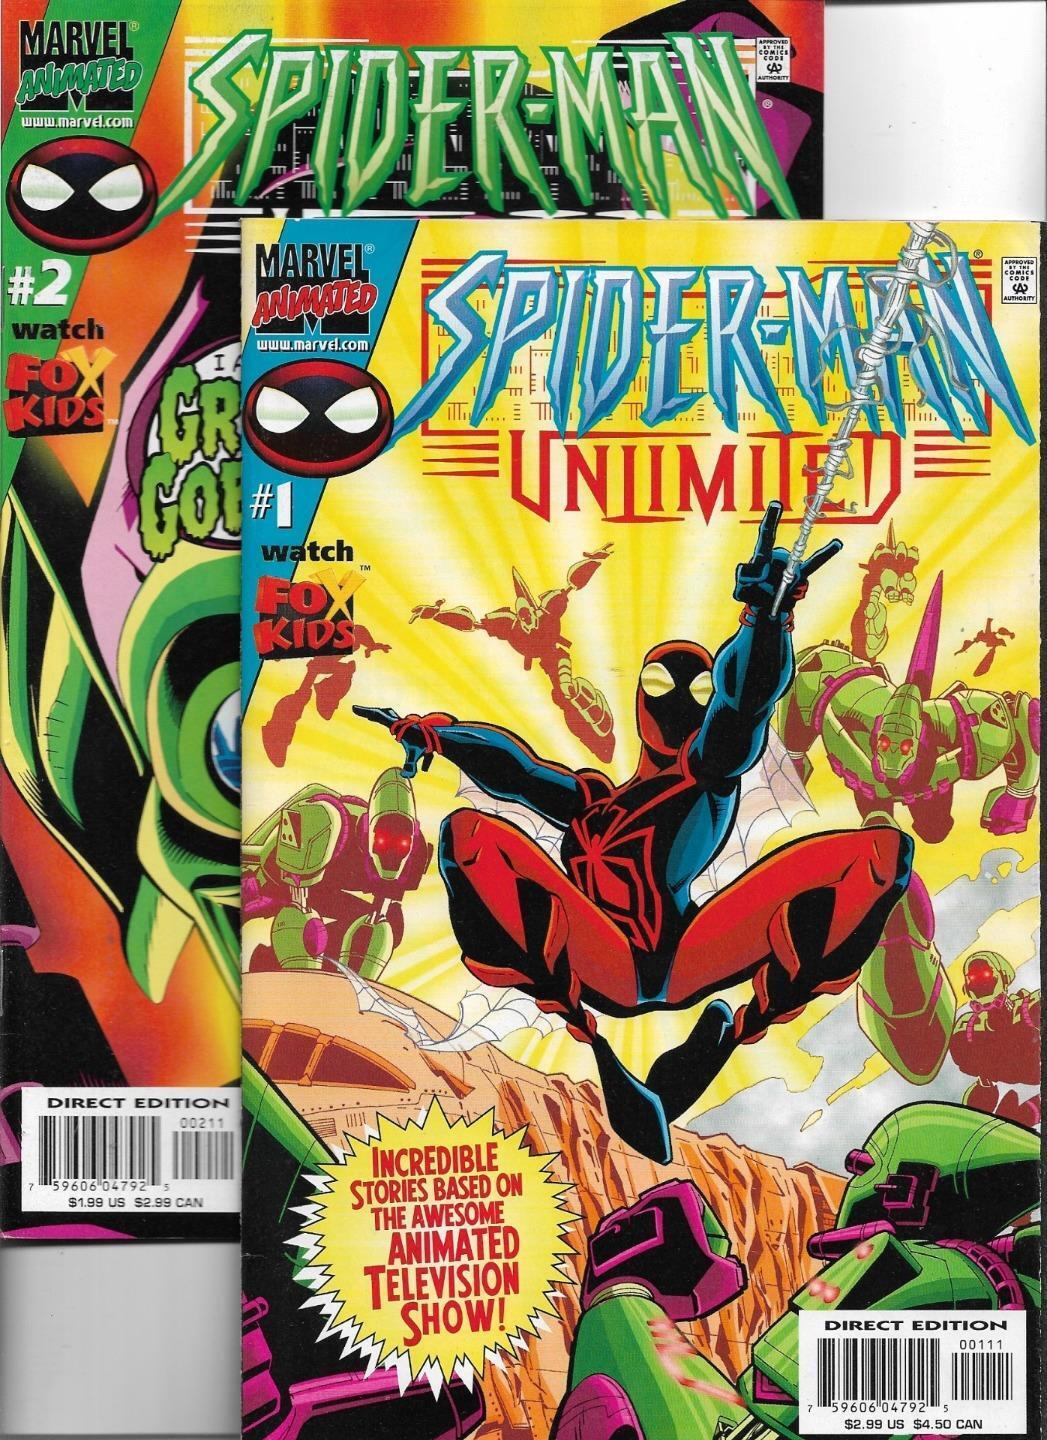 SPIDER-MAN UNLIMITED #1 #2 1999 NEAR MINT- 9.2 3595 GREEN GOBLIN